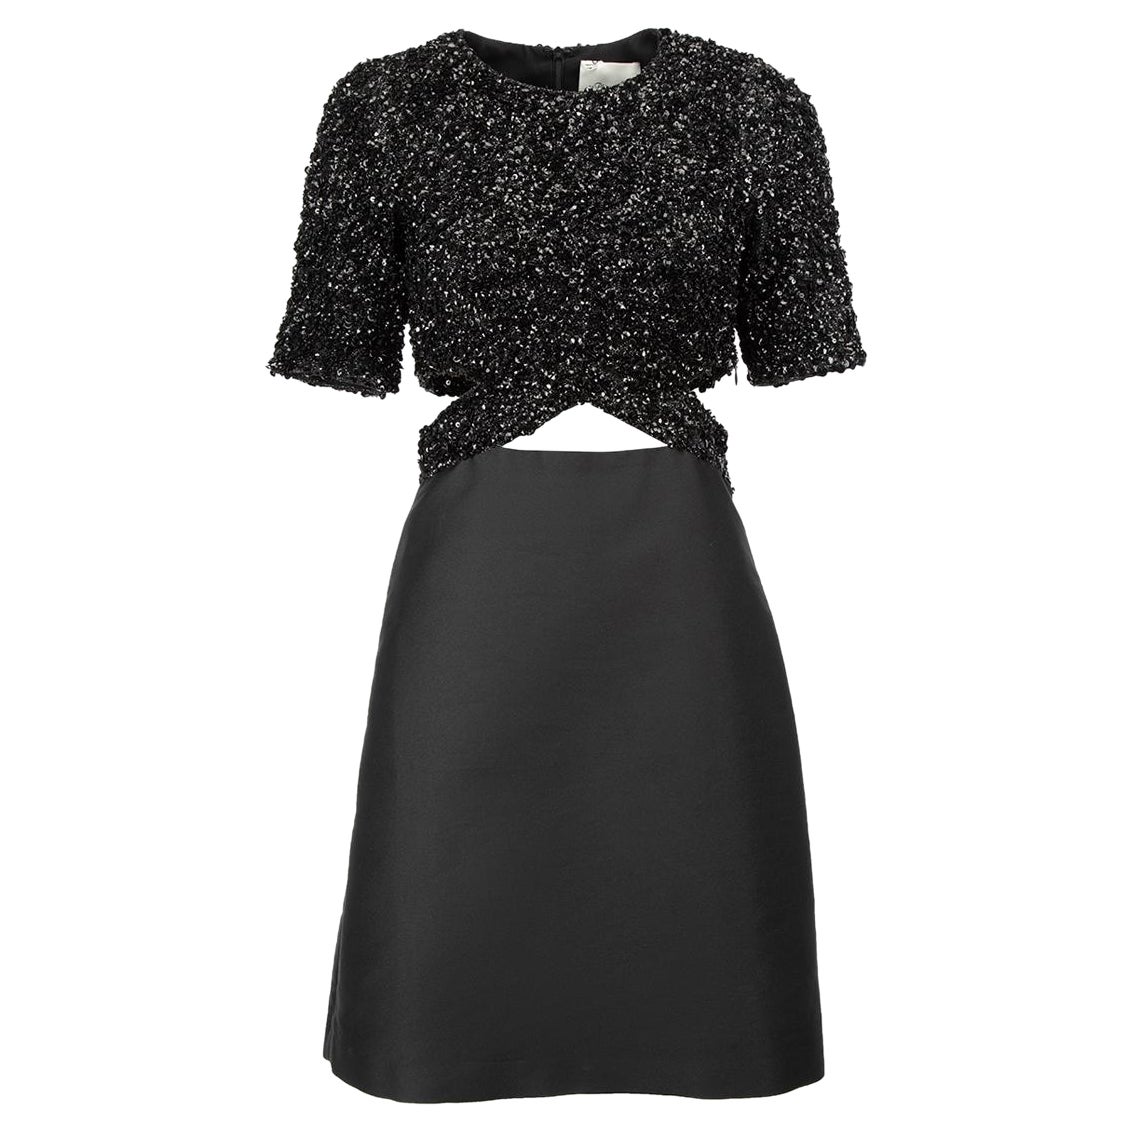 3.1 Phillip Lim Black Embellished Cut Out Accent Mini Dress Size XS